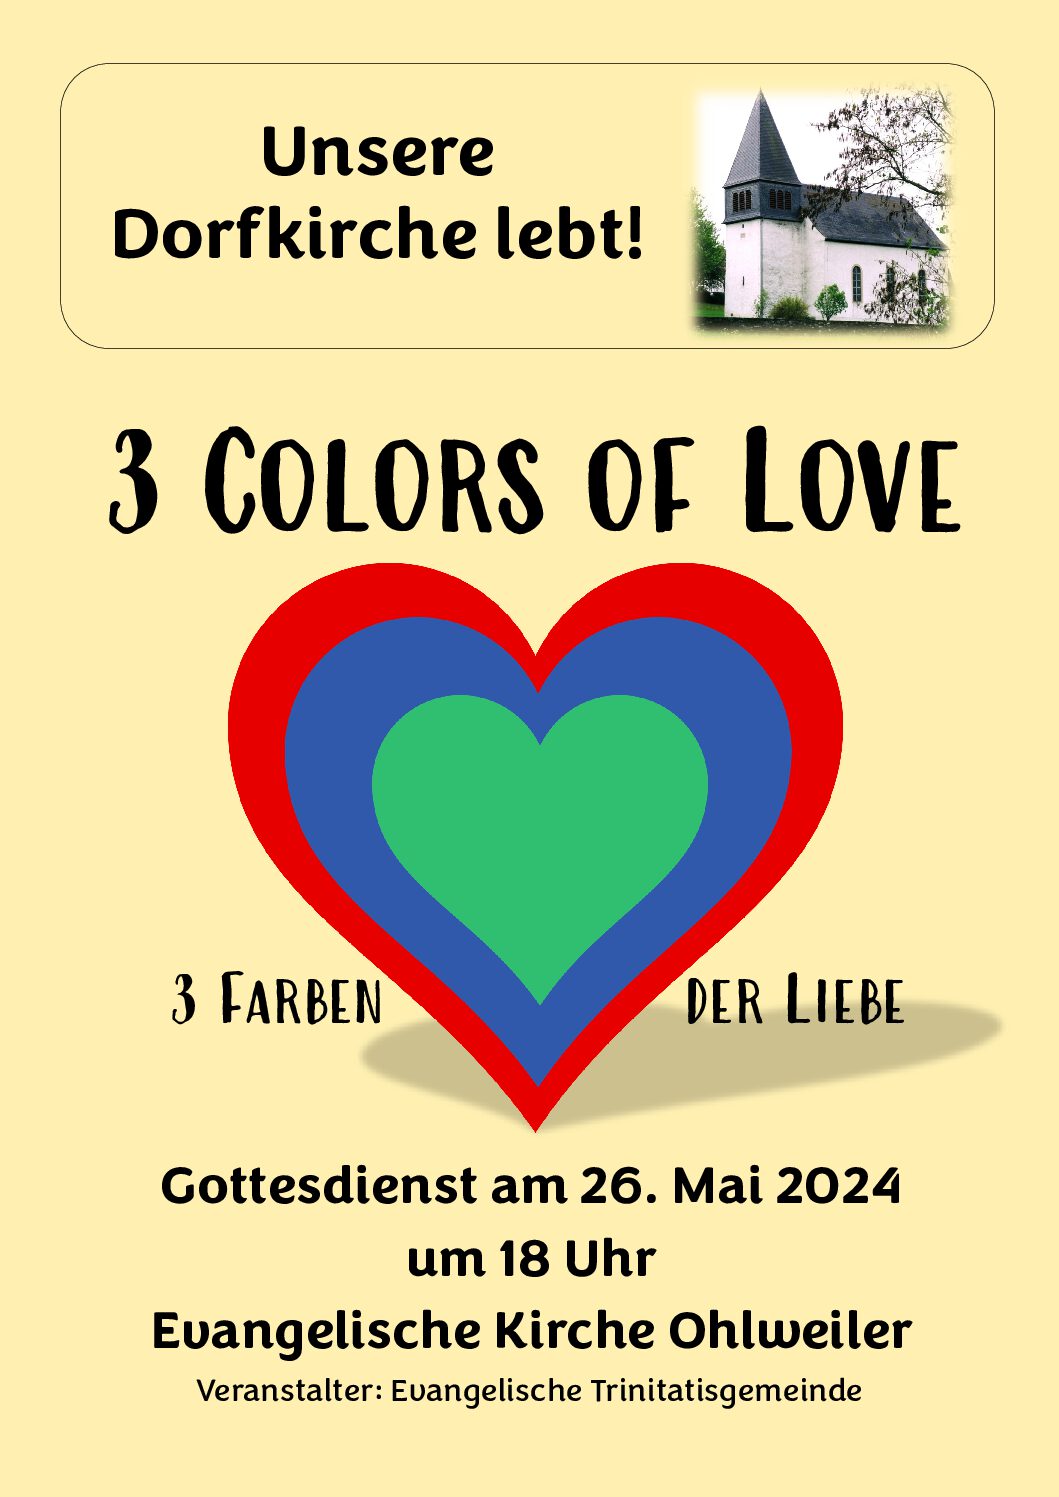 Unsere Dorfkirche lebt - 3 Colors of Love